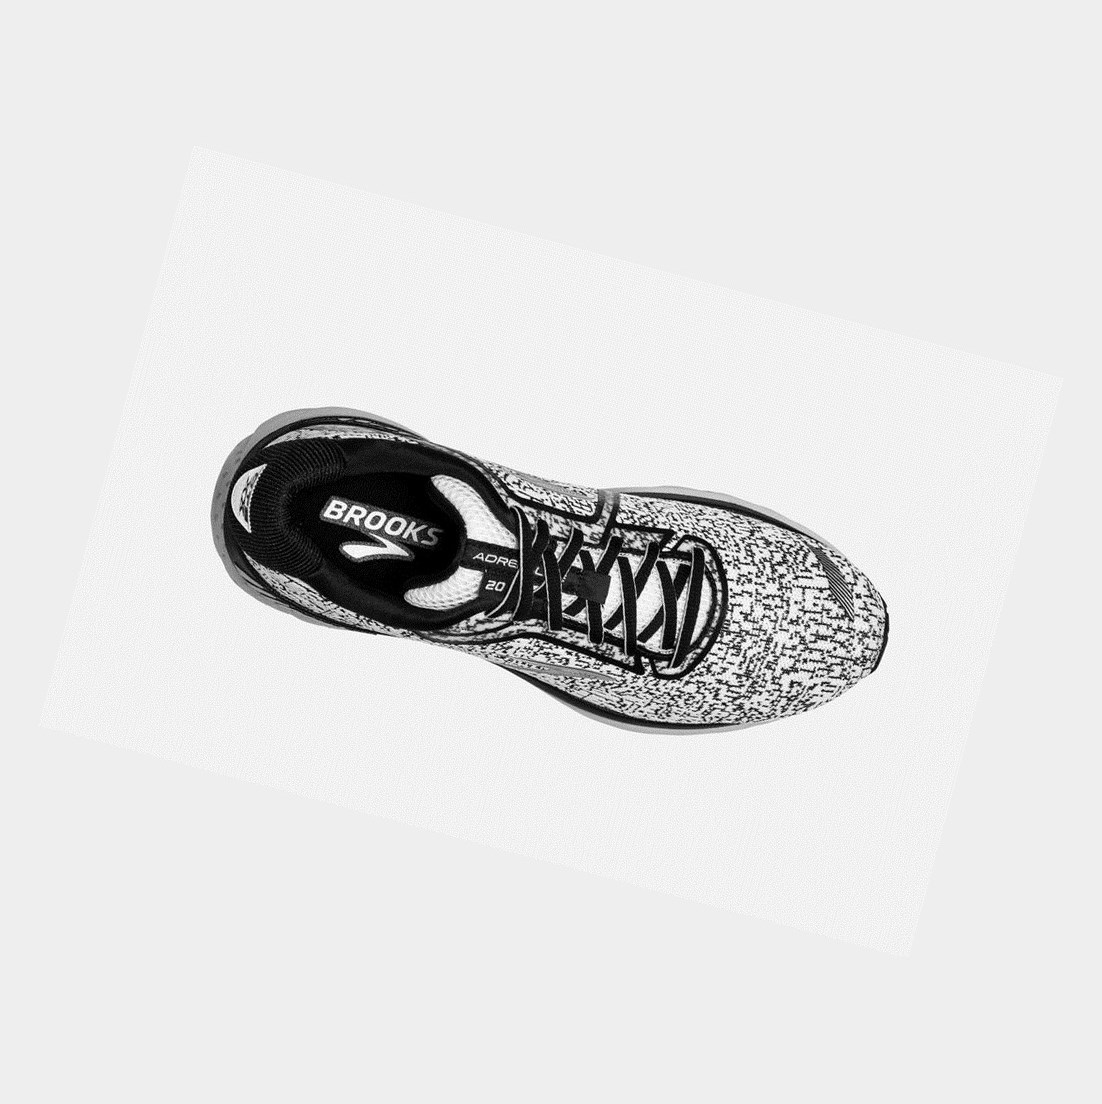 Brooks Adrenaline GTS 20 Women's Walking Shoes White / Black / Oyster | LGIJ-76934